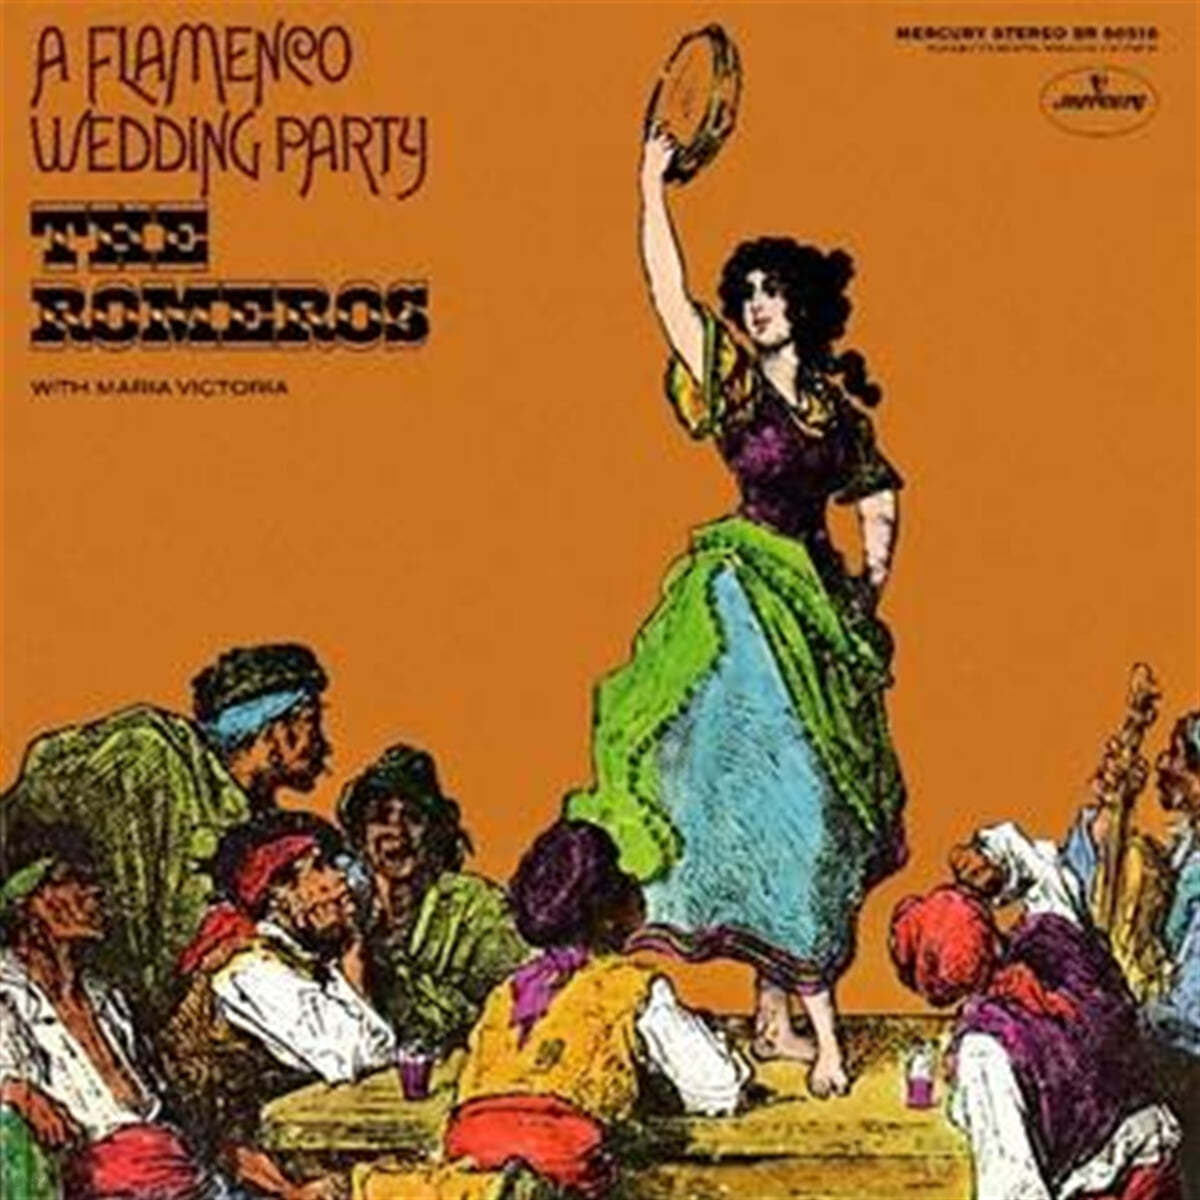 Los Romeros 플라멩코 웨딩 파티 (A Flamenco Wedding Party) [LP] 